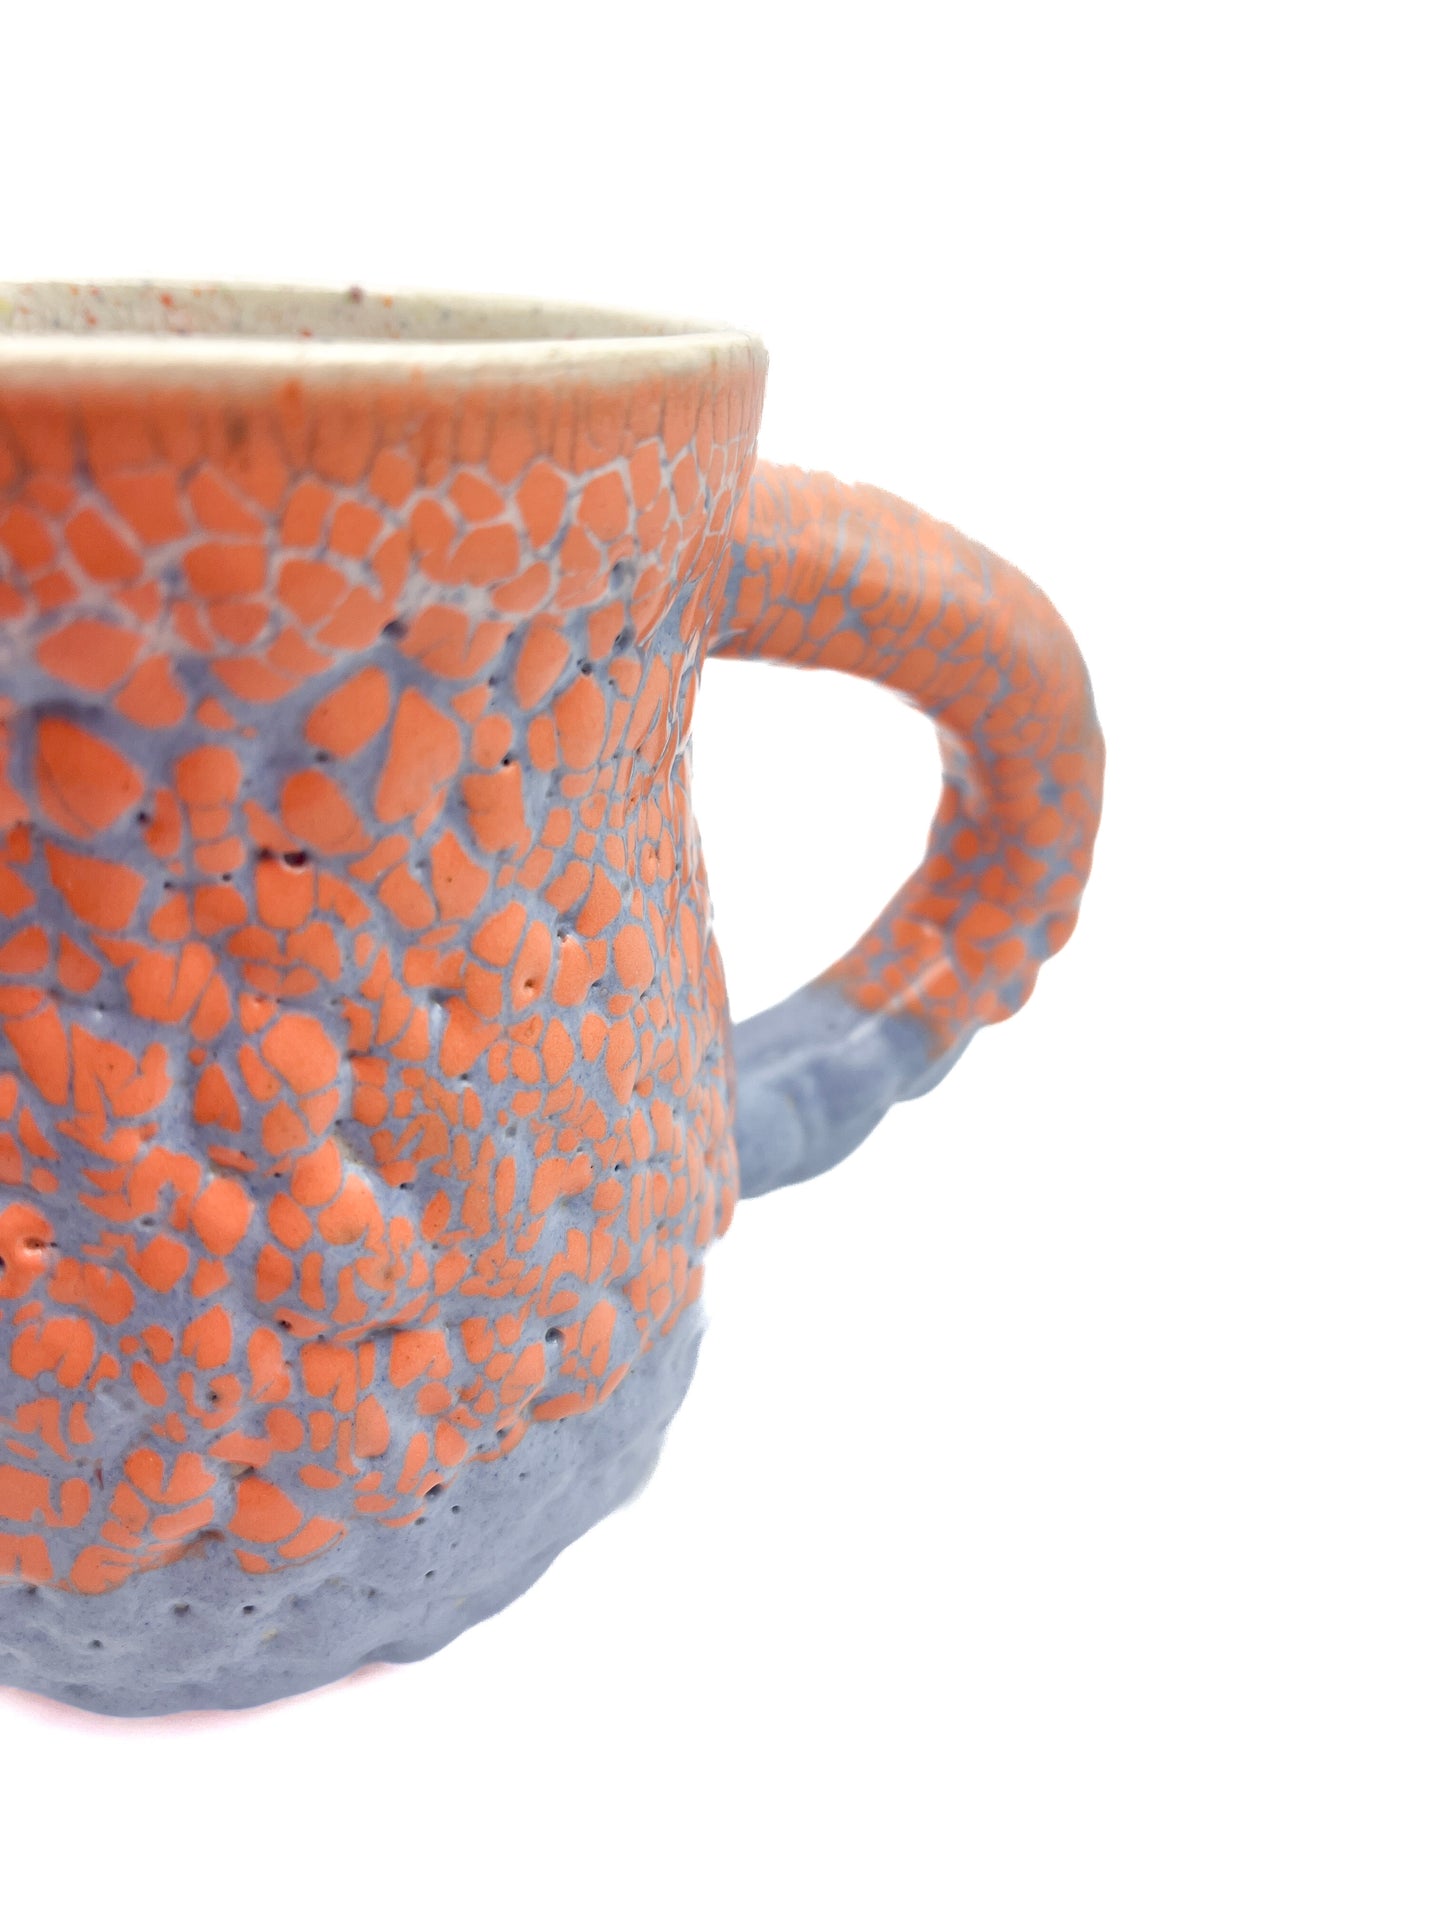 Detail picture of fired mug with orange supergloop glaze over blue puff glaze.